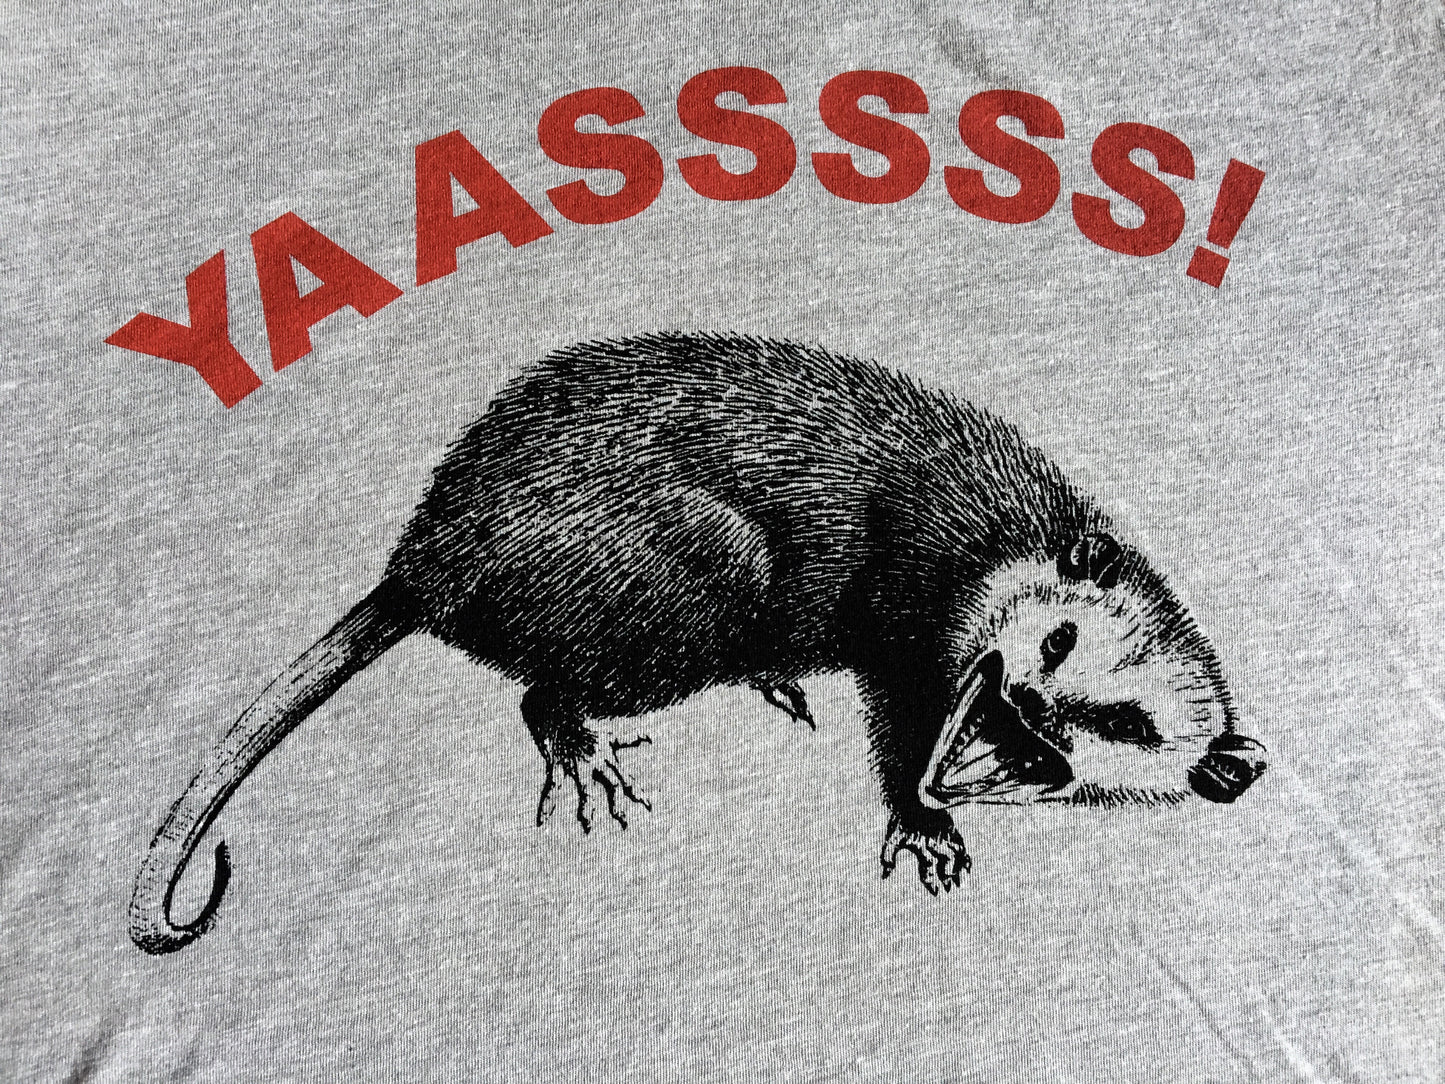 Yas Yass Yasss Possum Opossum Triblend Tshirt